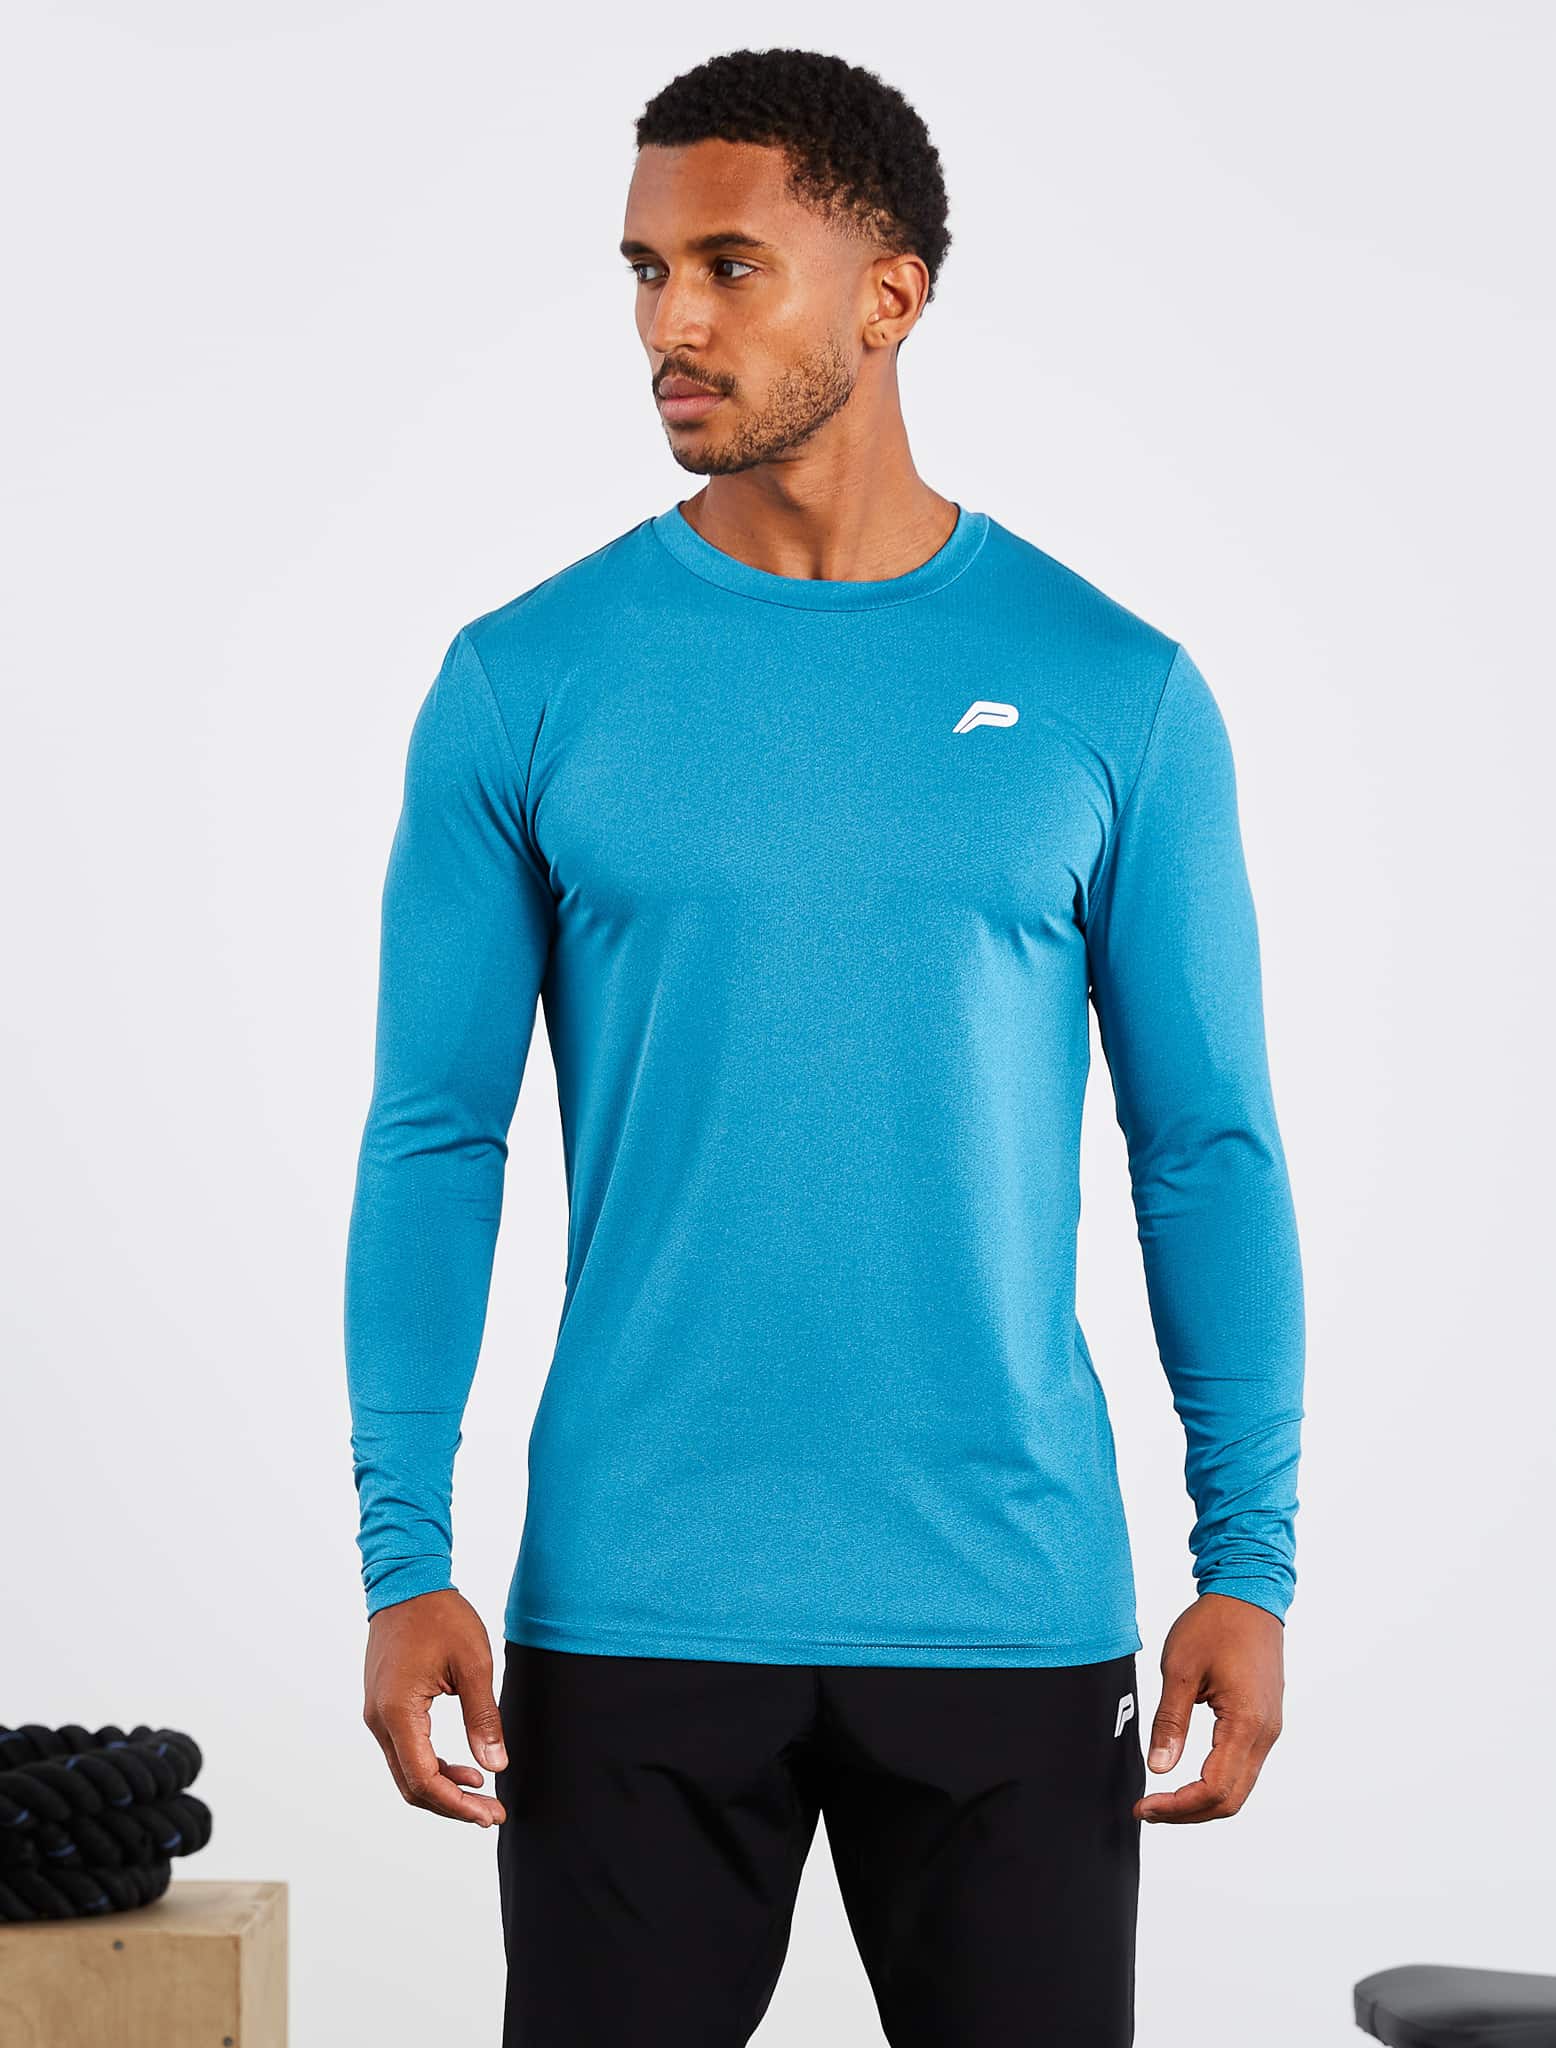 Men's running tight fitness T-shirt long-sleeved man gym